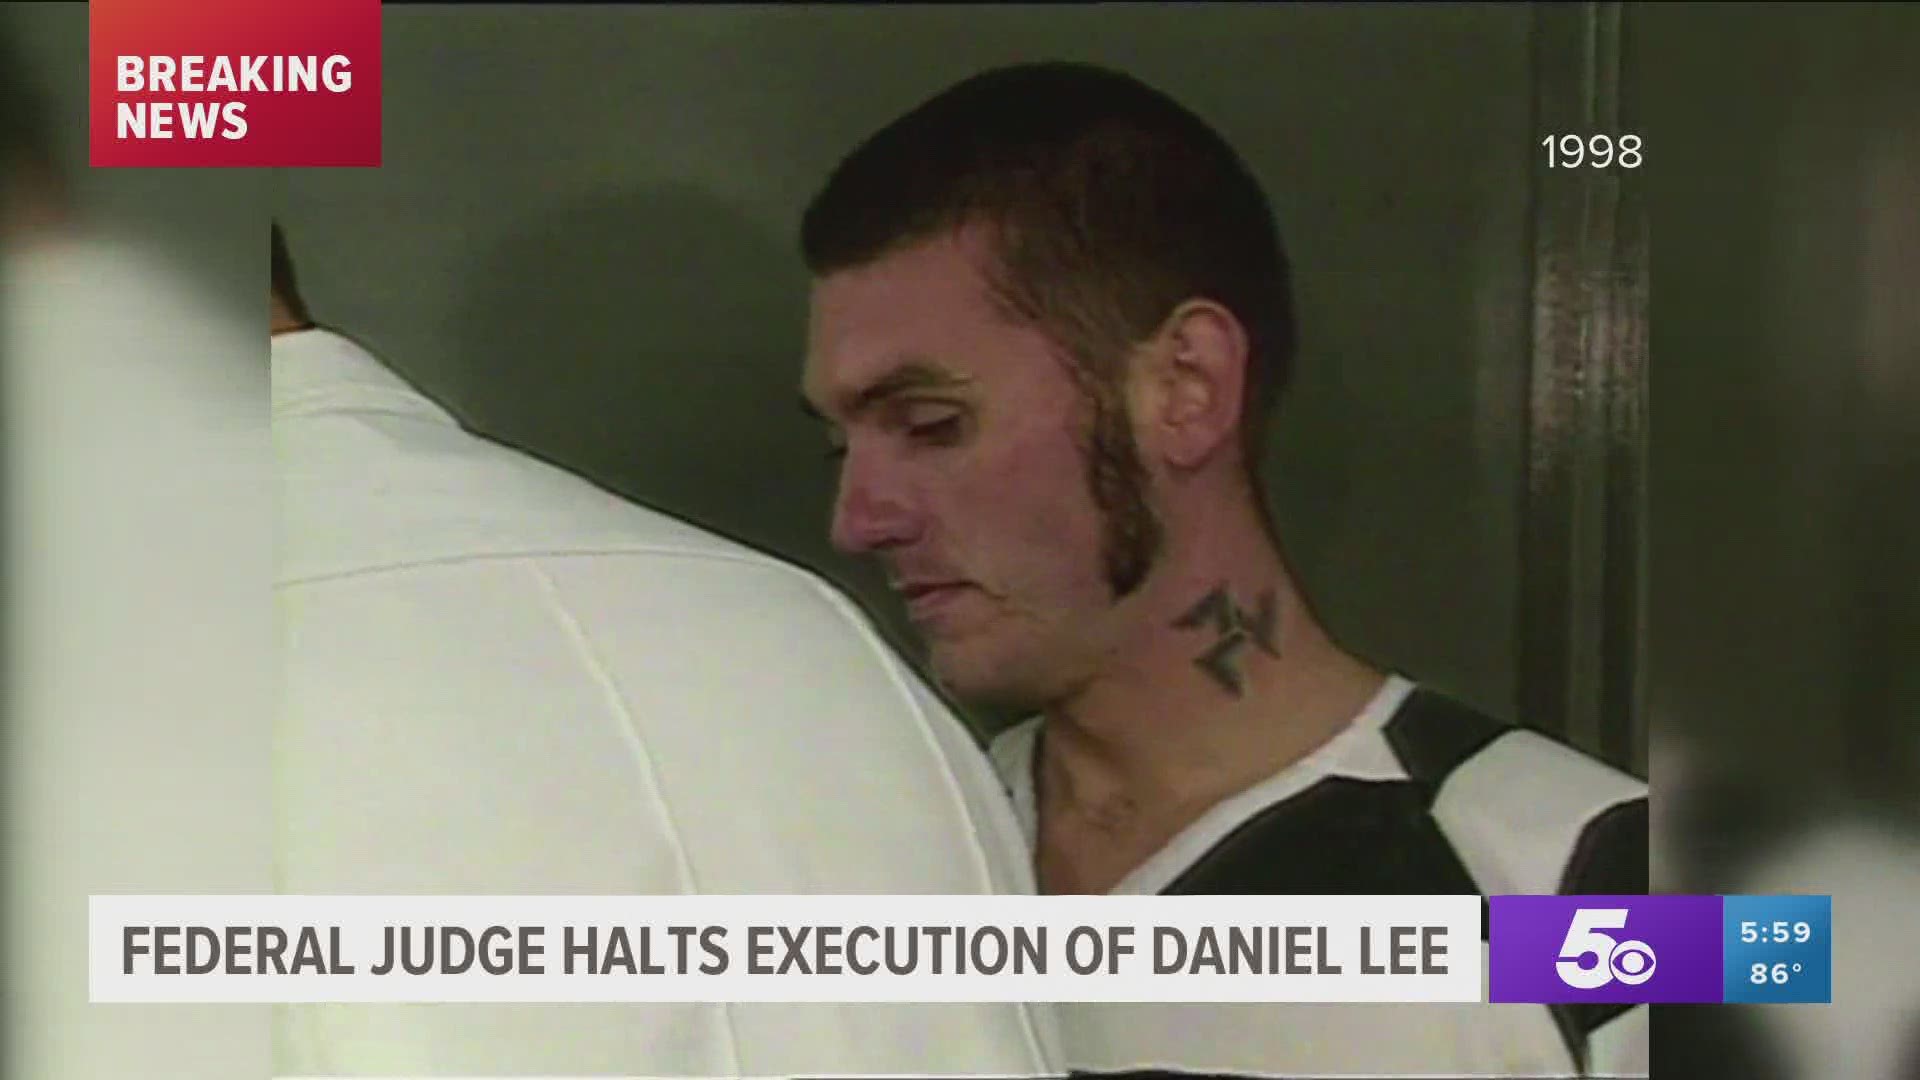 Federal Judge halts execution of Daniel Lee